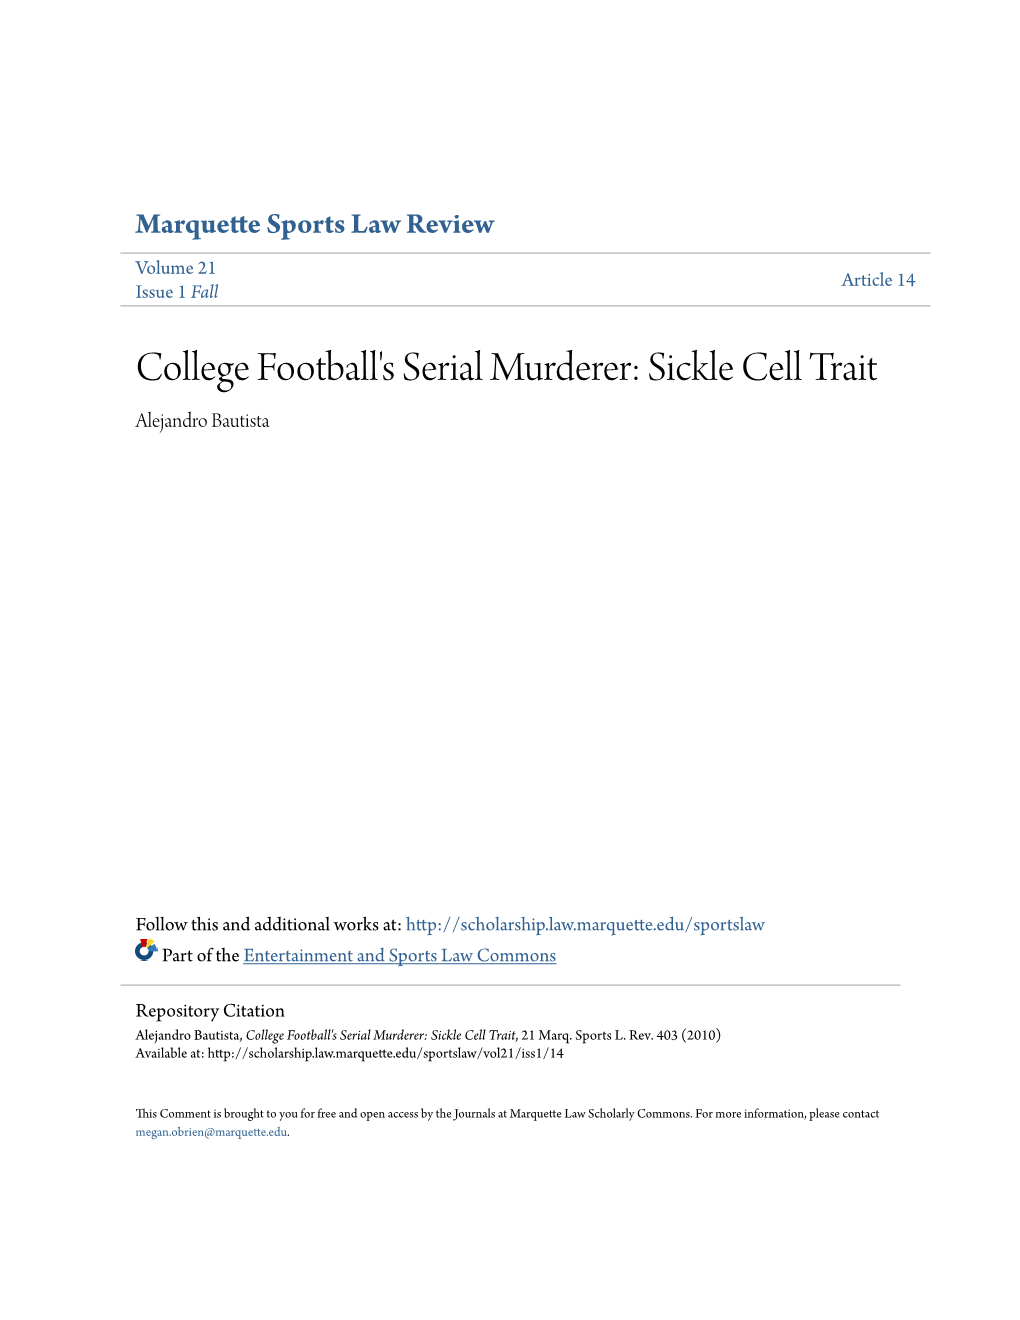 College Football's Serial Murderer: Sickle Cell Trait Alejandro Bautista